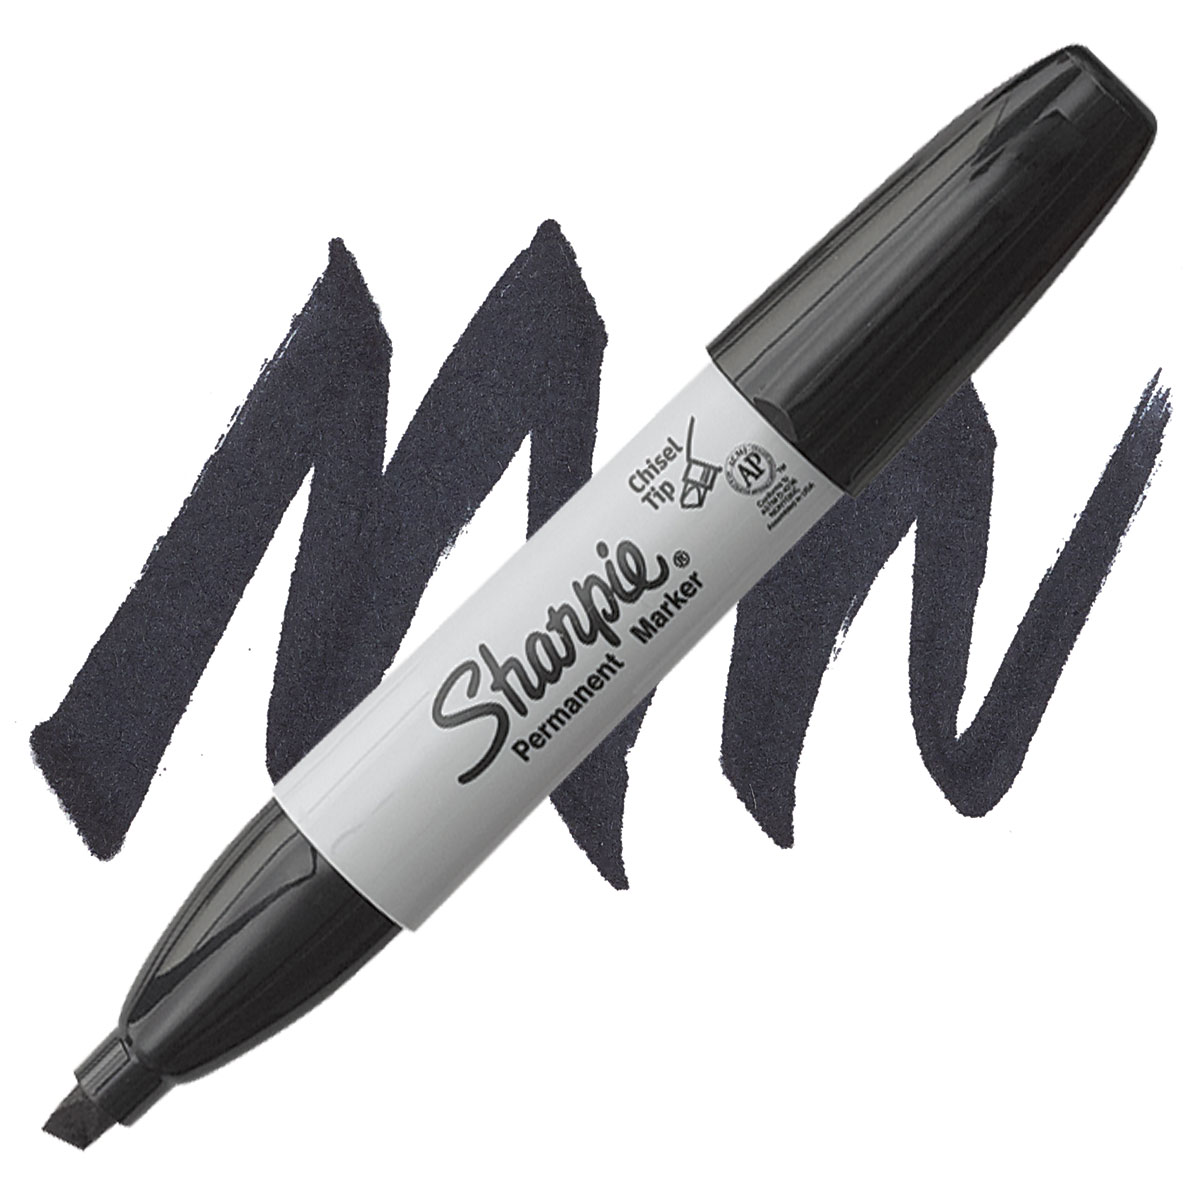 4 Sharpie Black Pens Writing, Calligraphy Sharpie Pen, Medium Point Stylo  Drawing, Sharpie Pen, Marker Art, Drawing 